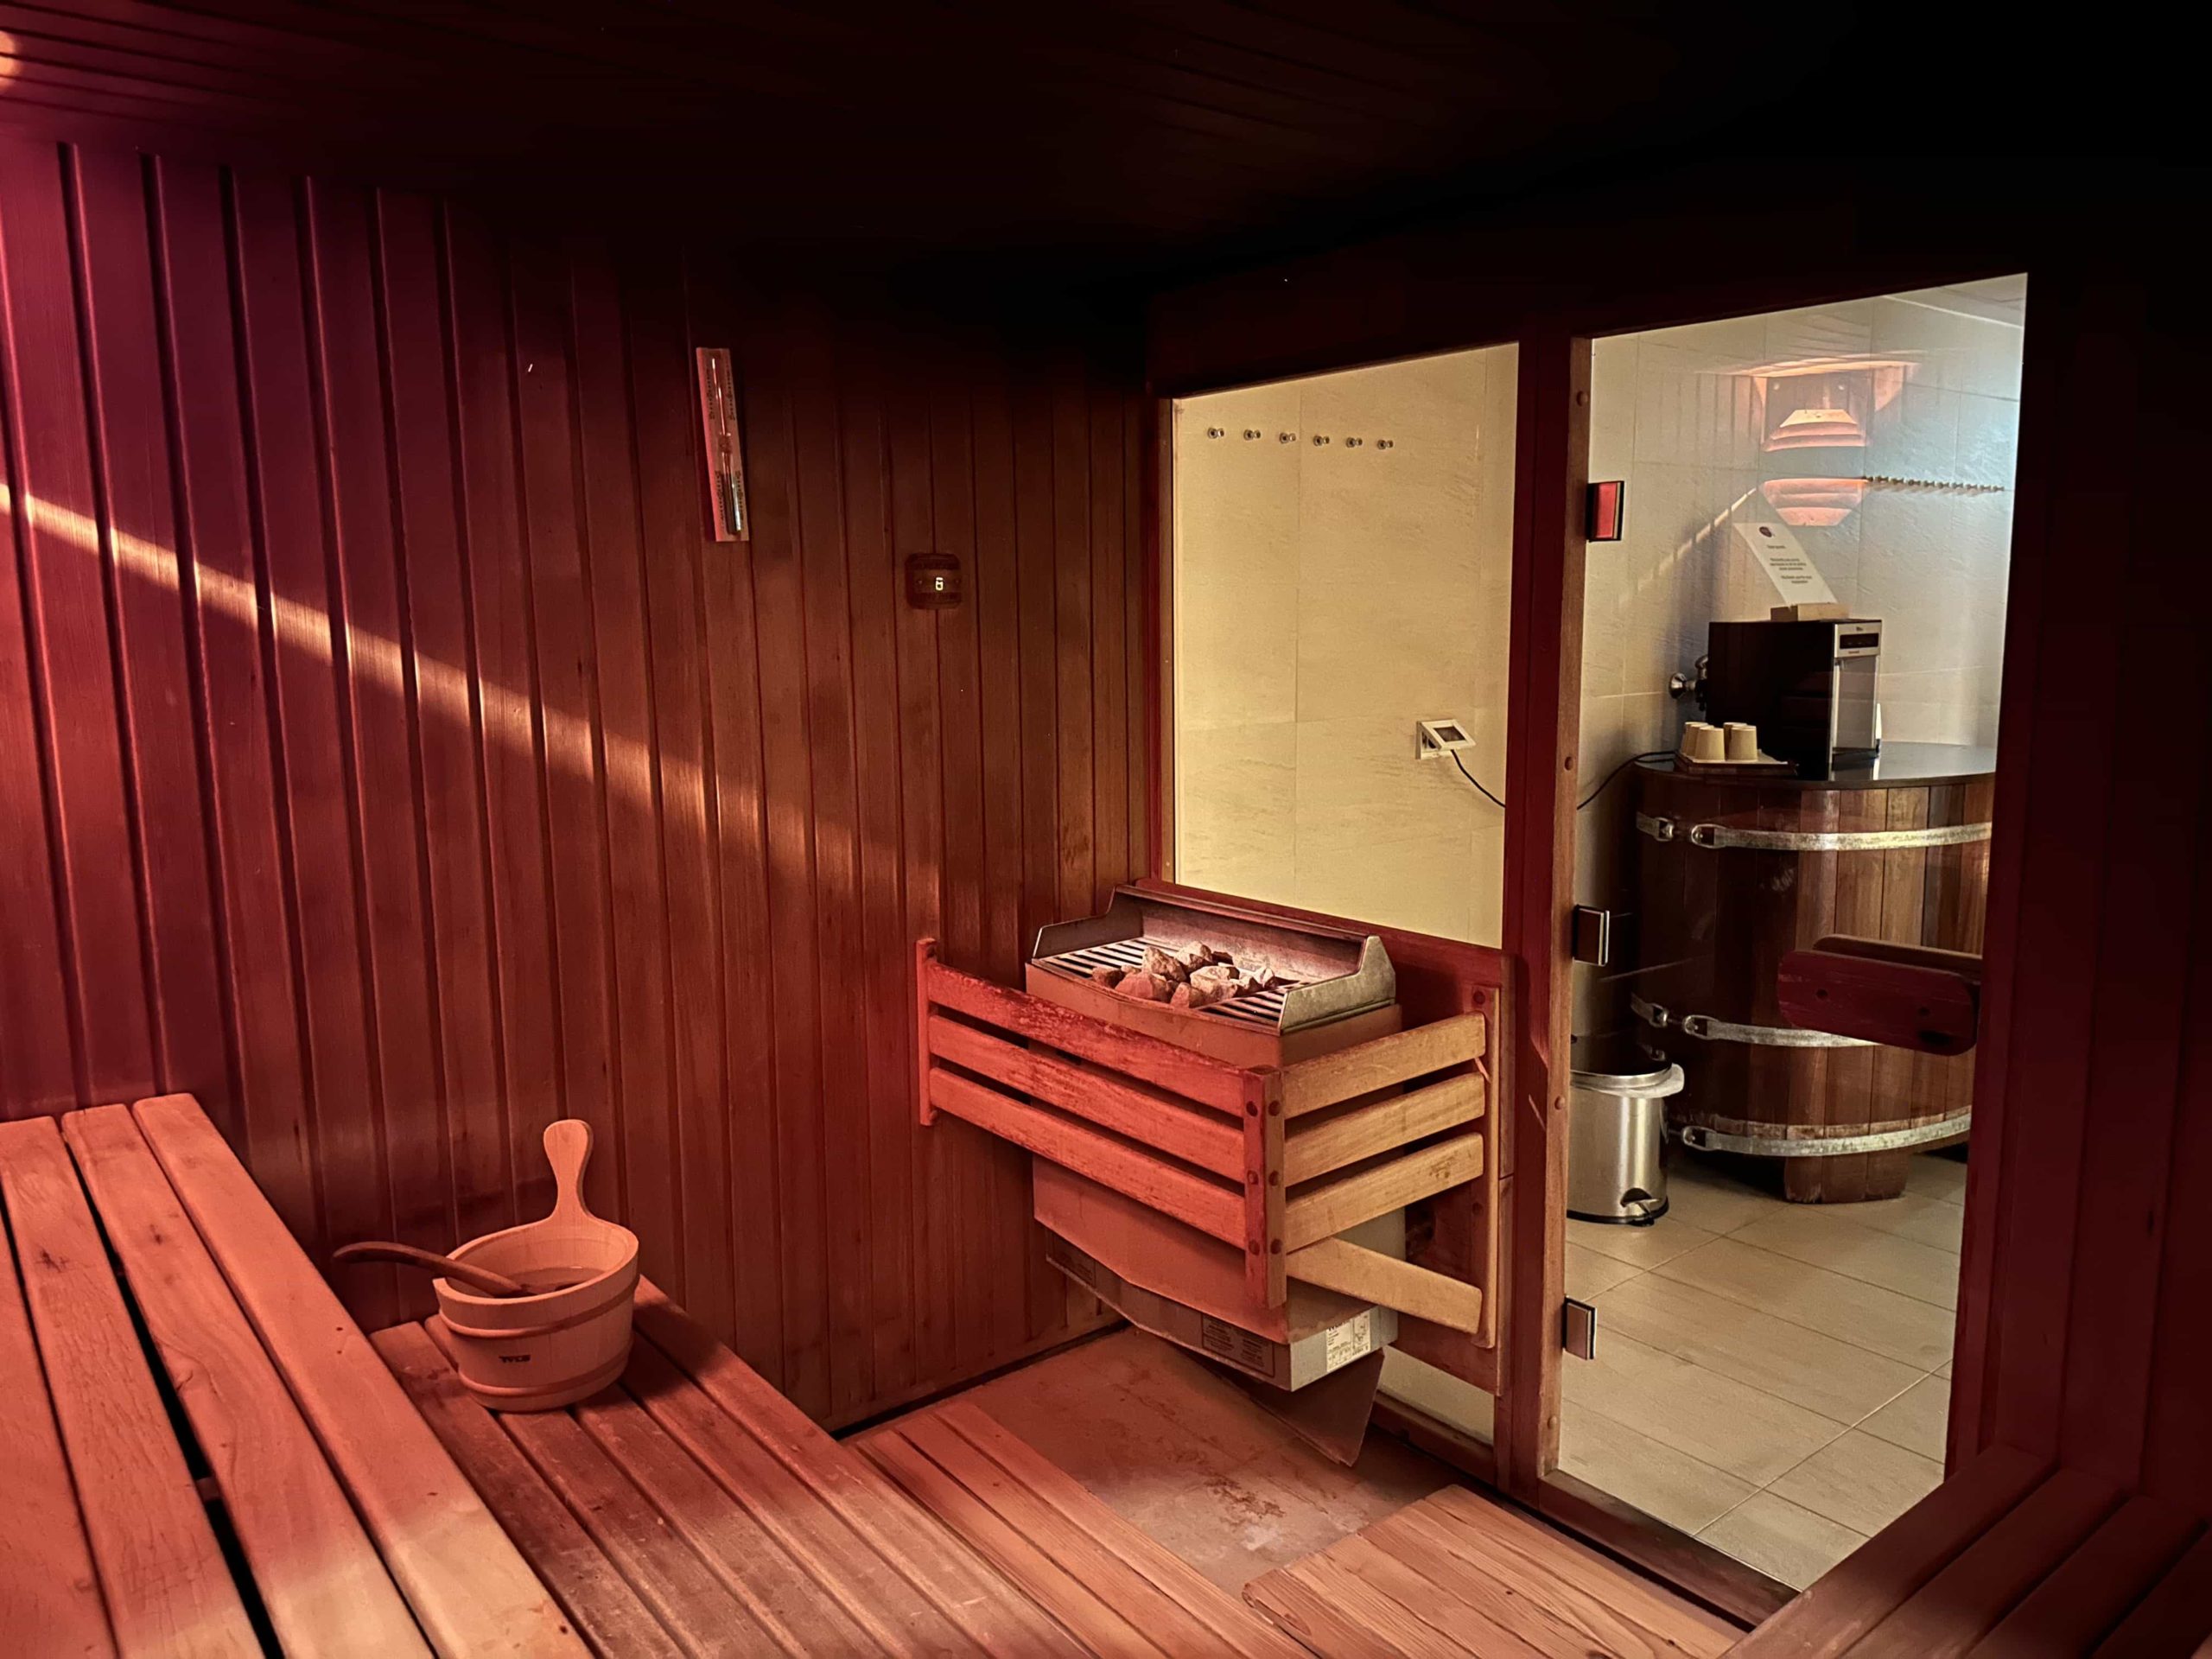 The inside of a small Finnish sauna